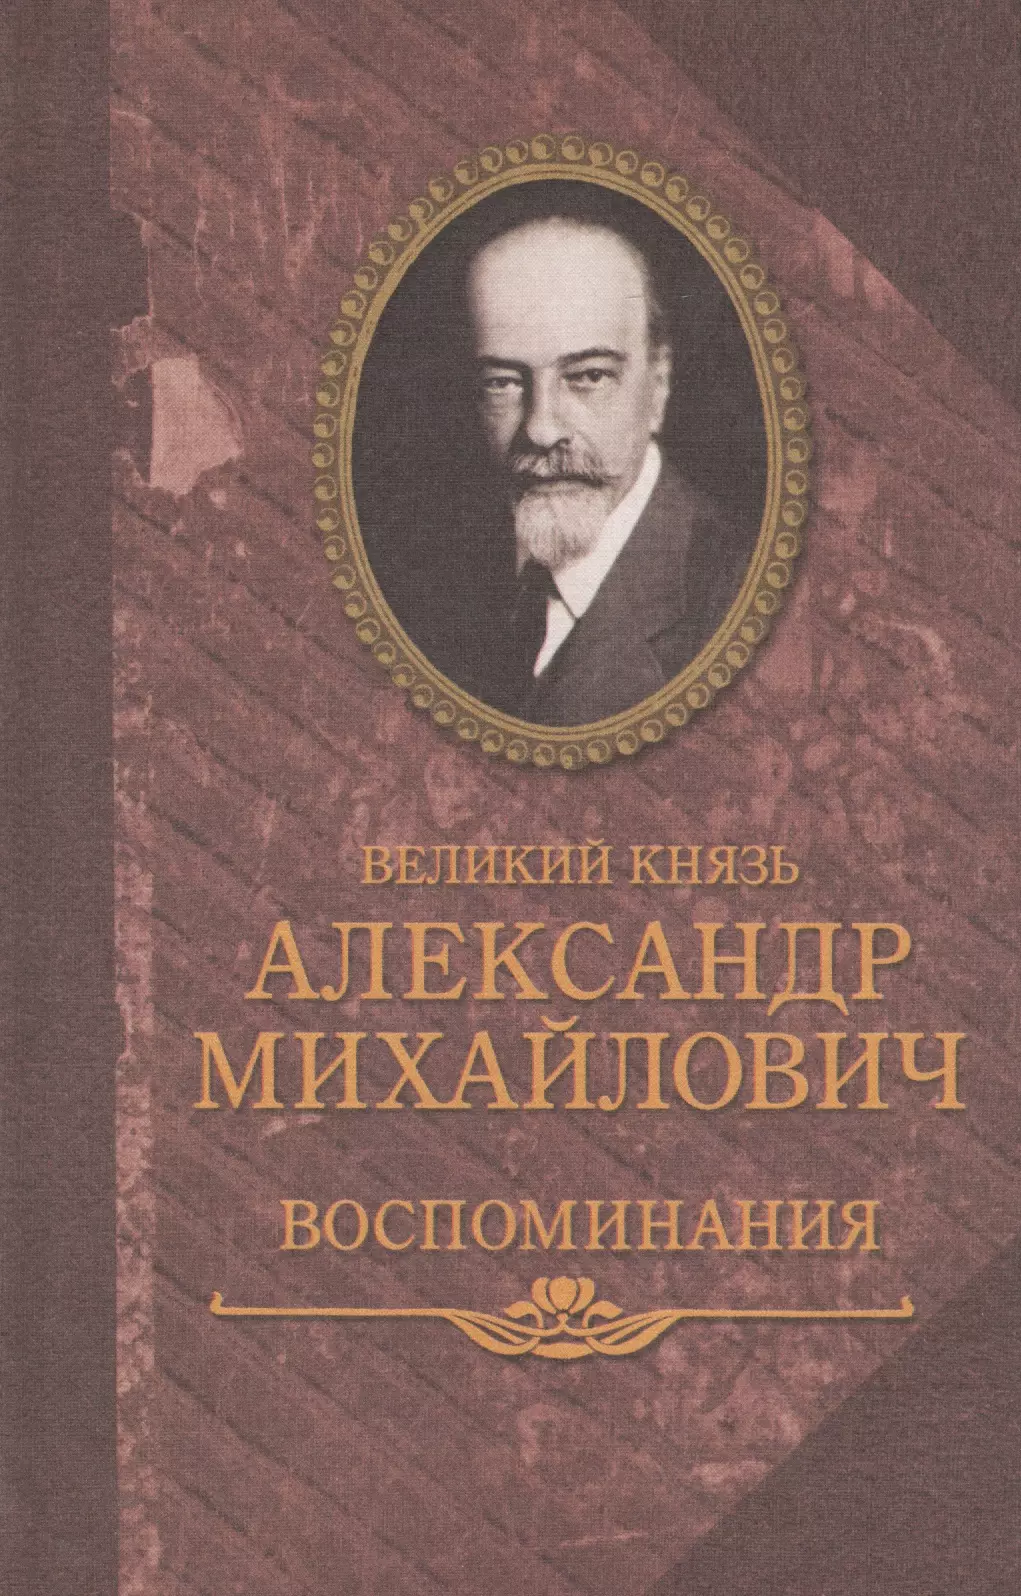 Романов Александр Михайлович - Воспоминания в двух книгах